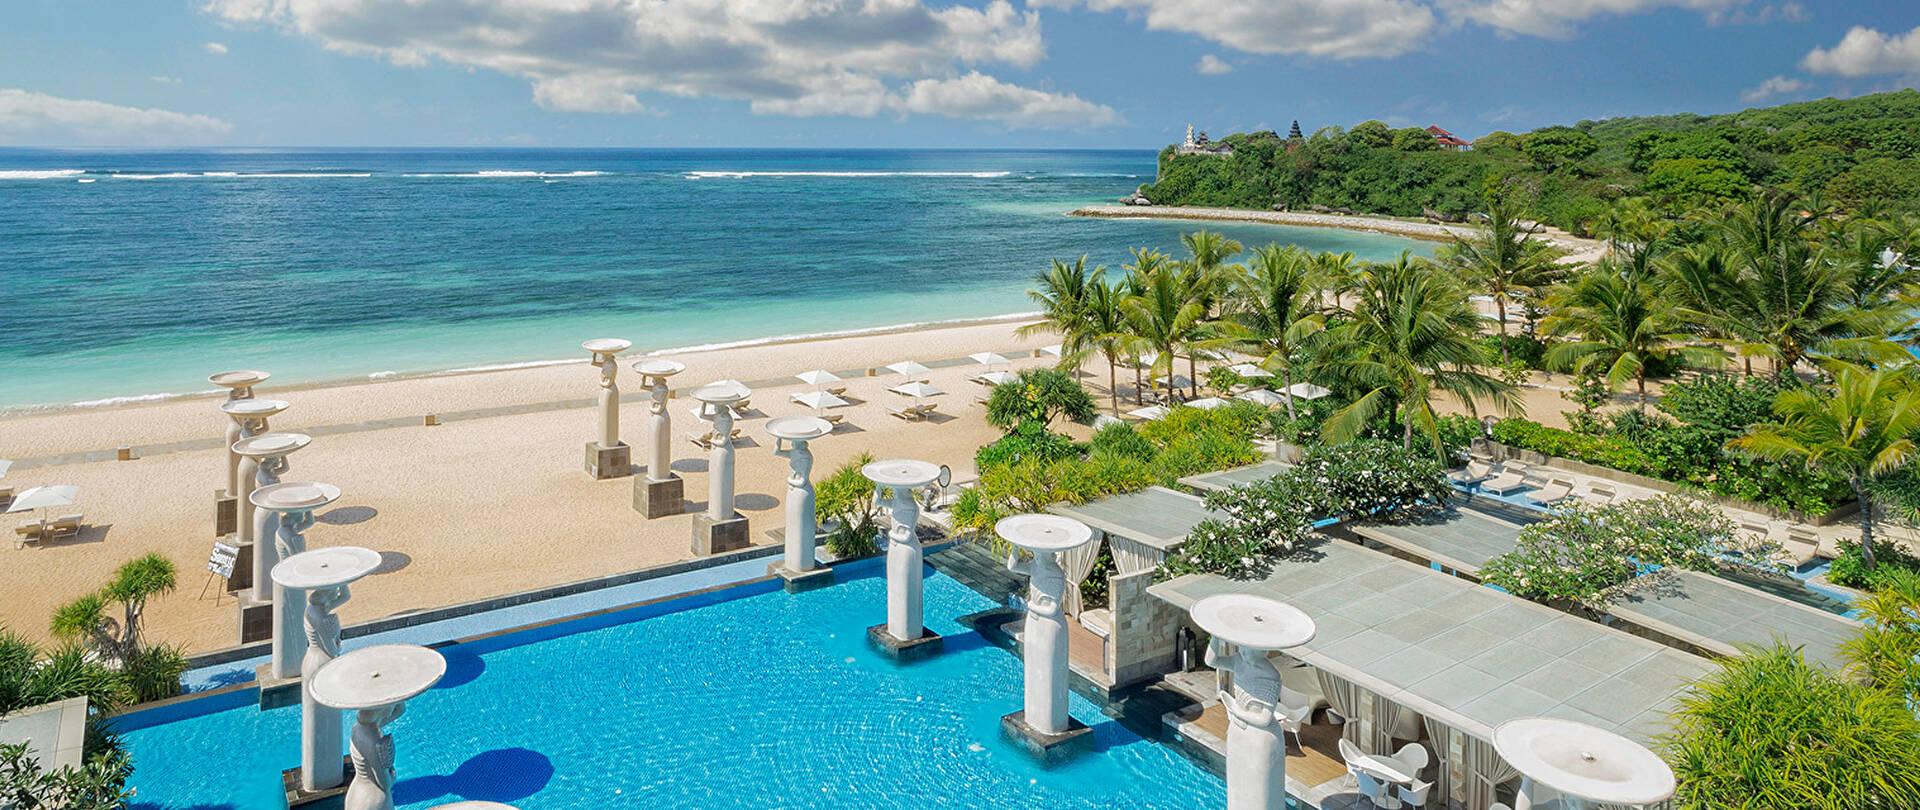 Family Style Set Menu Package | The Mulia, Mulia Resort & Villas - Nusa Dua, Bali